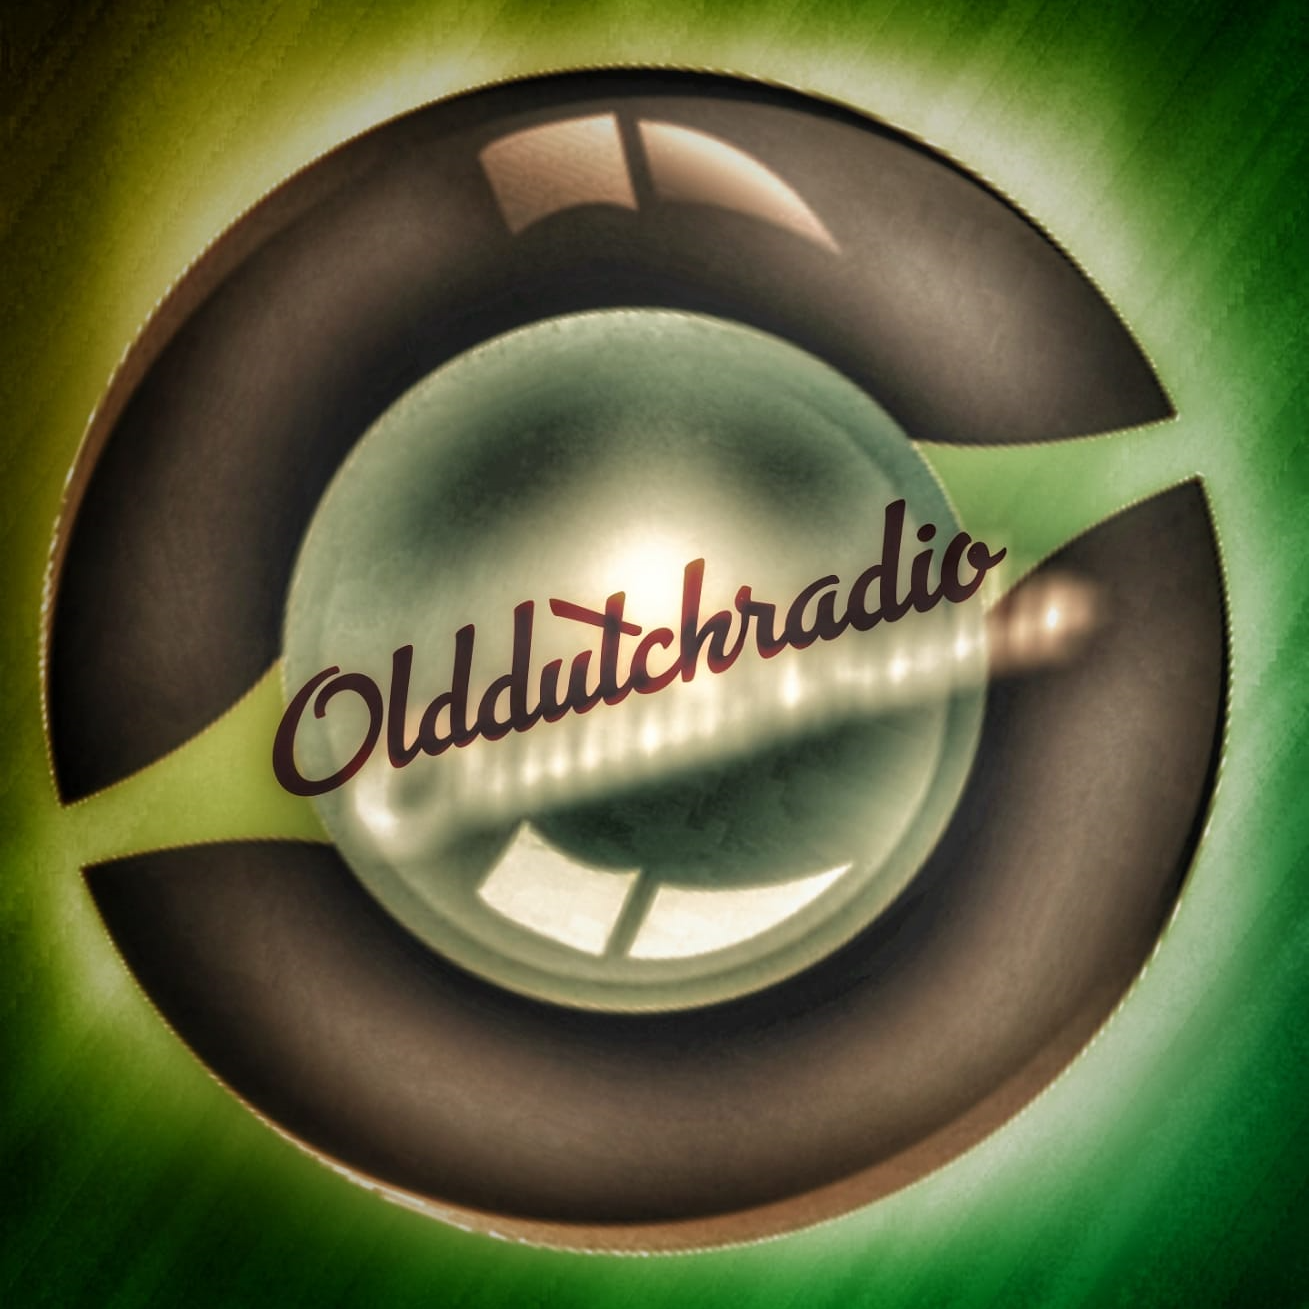 olddutchradio